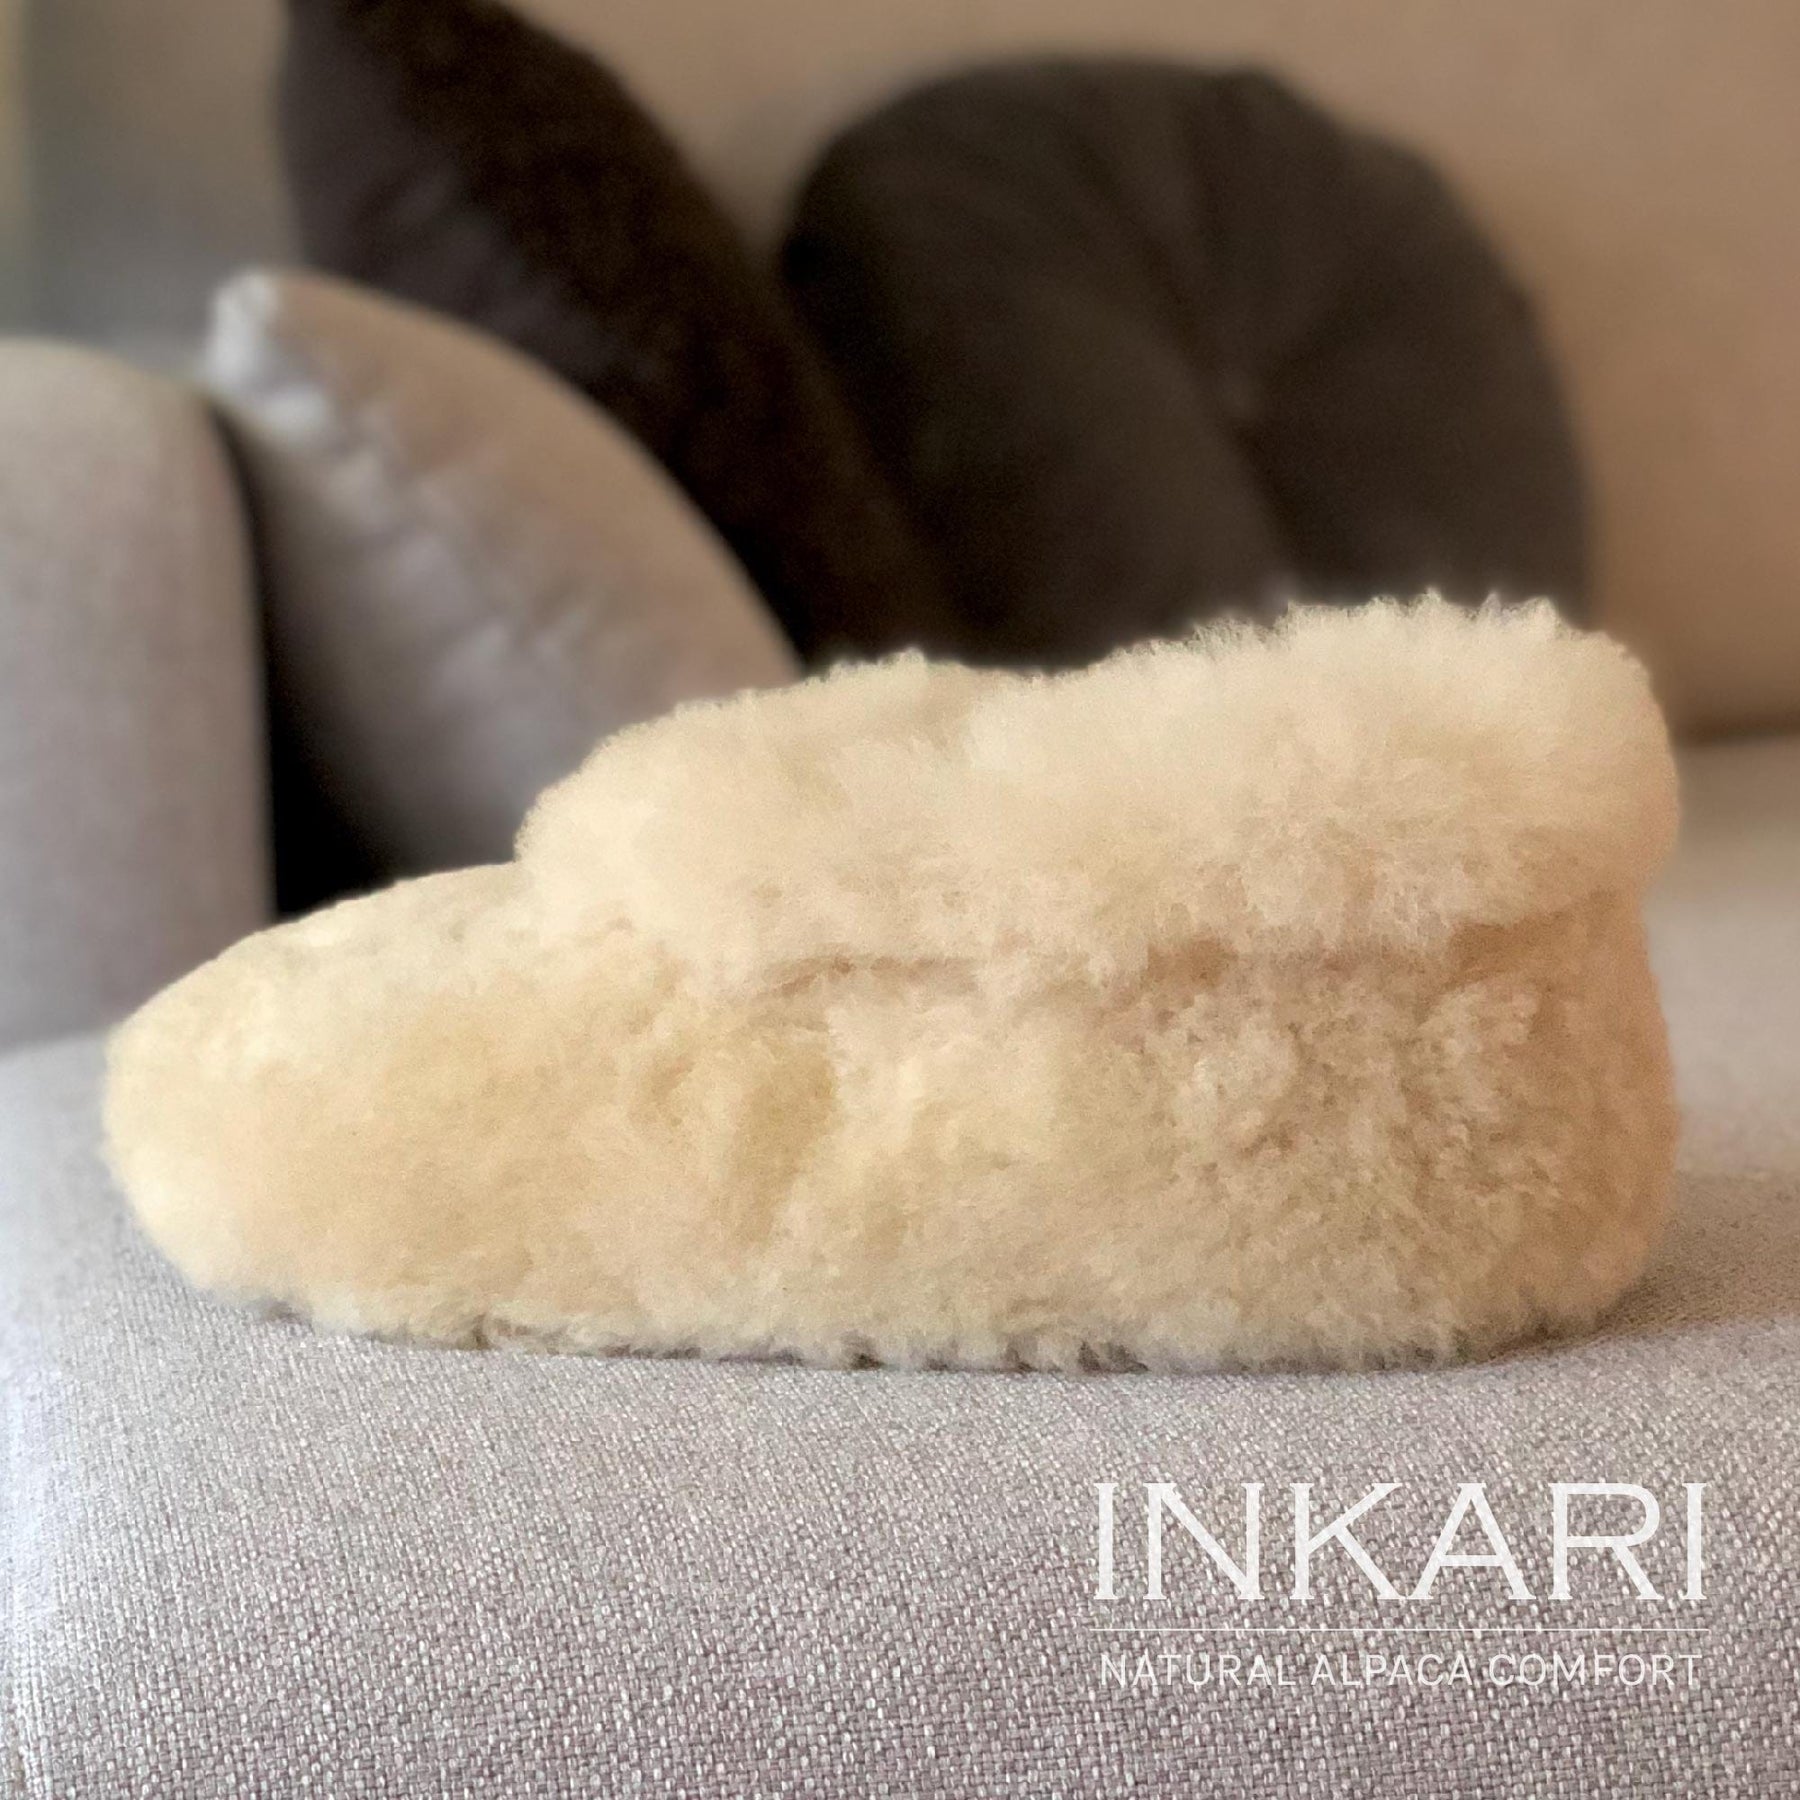 Suave - Alpaca Slippers - Blond - alpaca wool - alpaca products & gifts - handmade - fairtrade gifts - by Inkari